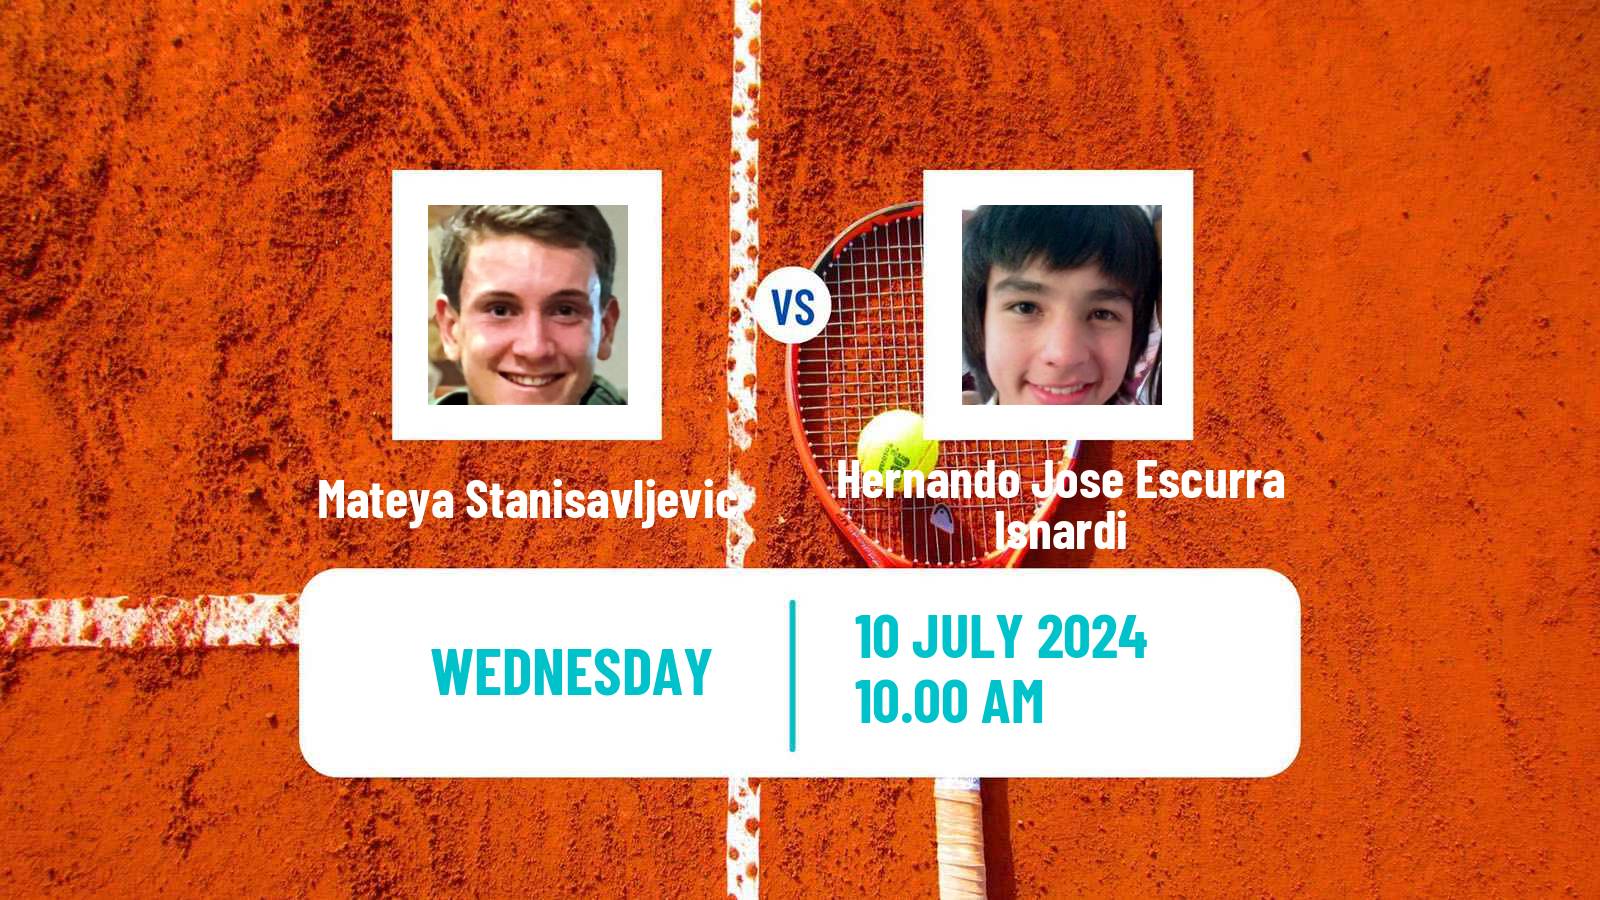 Tennis ITF M15 Kursumlijska Banja 10 Men Mateya Stanisavljevic - Hernando Jose Escurra Isnardi